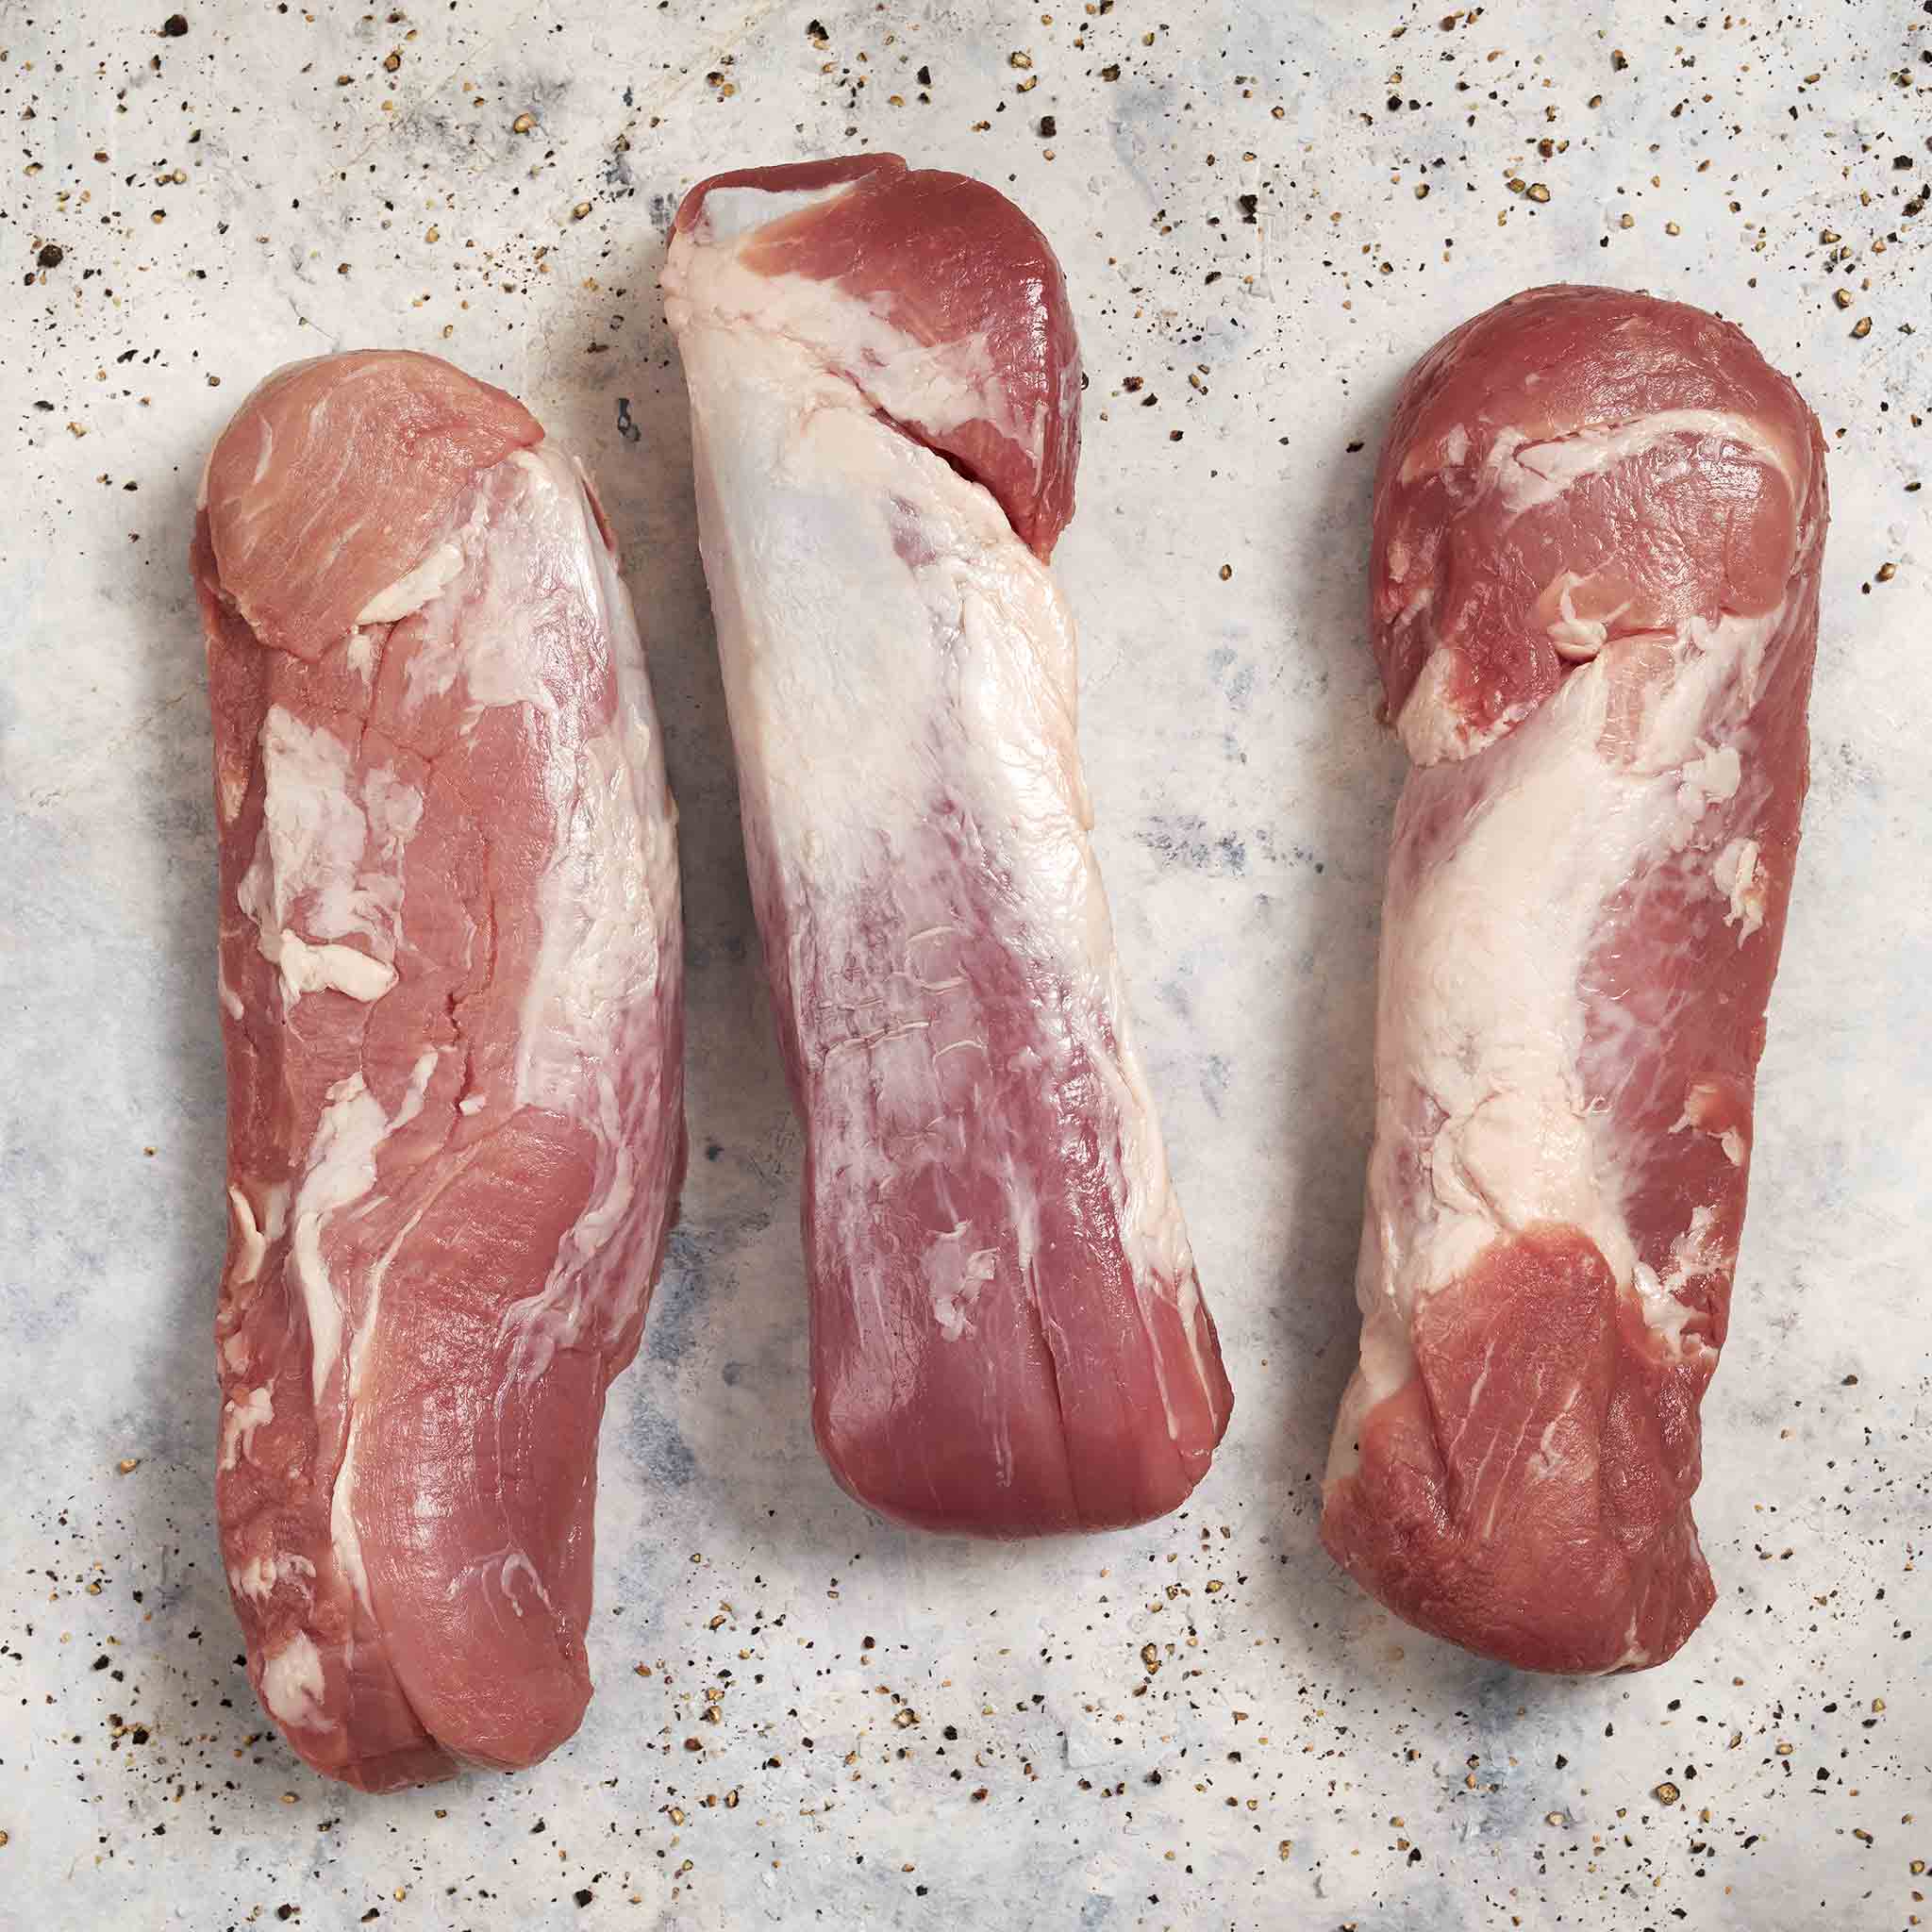 3130 WF Raw Pork Tenderloin - Family Size Pork